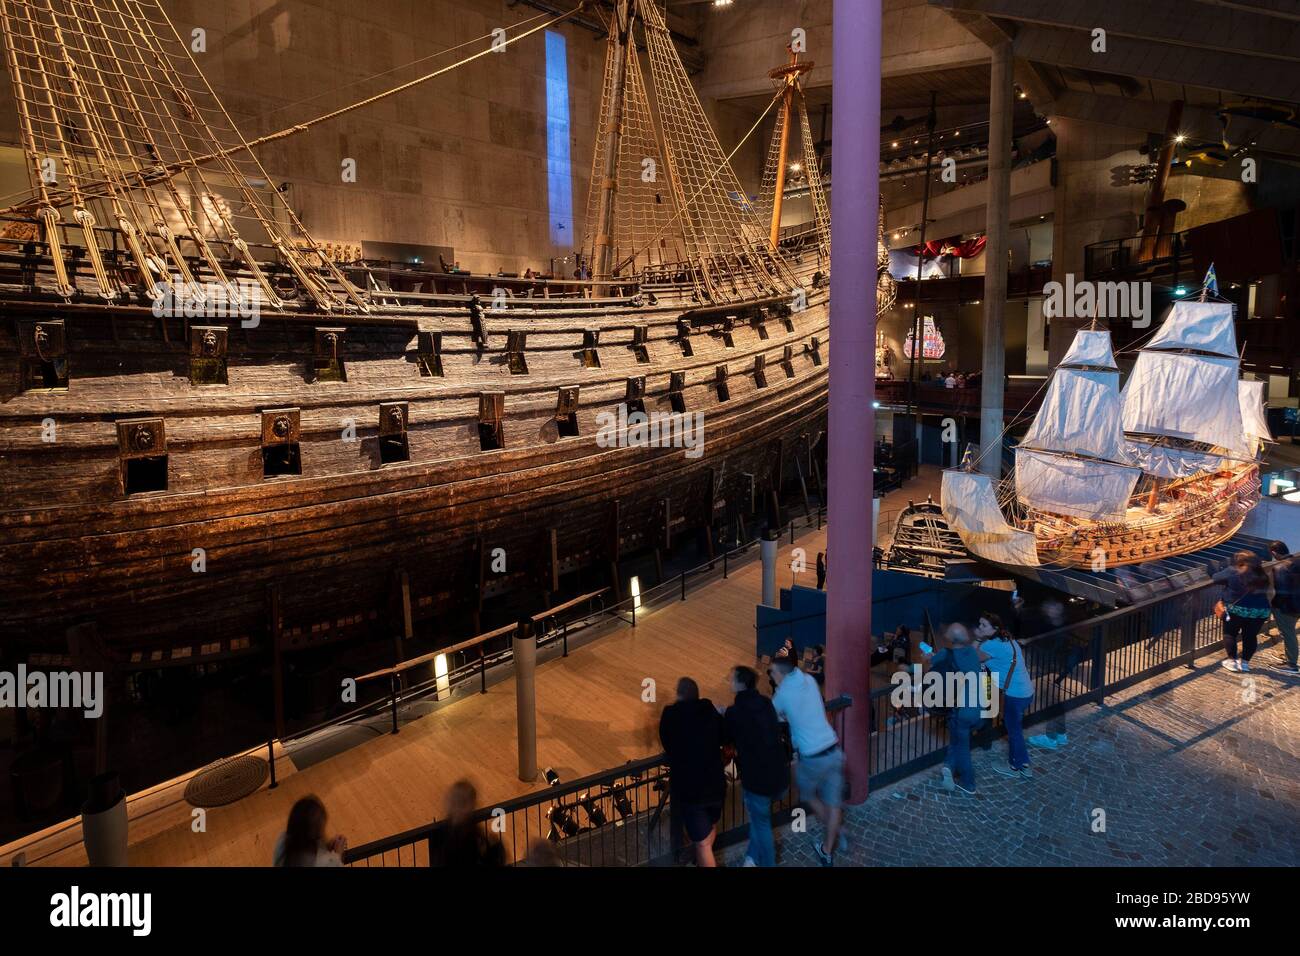 Vasa warship at the Vasa Museum in Stockholm, Sweden, Europe Stock Photo